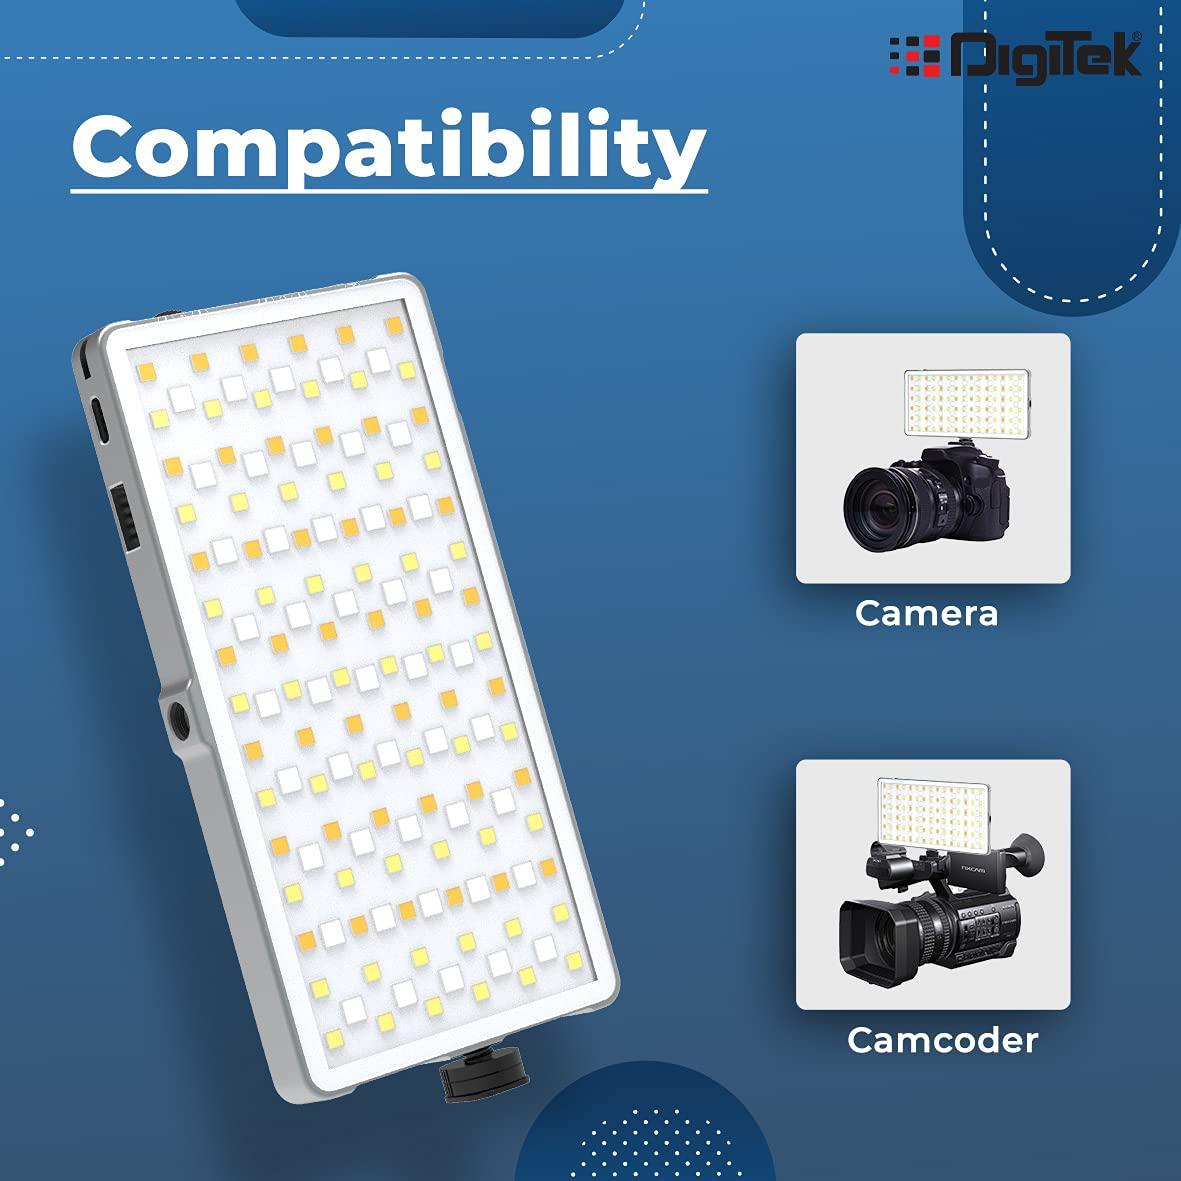 Digitek (LED-D135 ML) Portable RGB LED 12w Video Light with 96 CRI, 21 Preset Effects, 4000mAh Battery, Multi Scene Lightening & Colour Temperature & Brightness Control. - Digitek